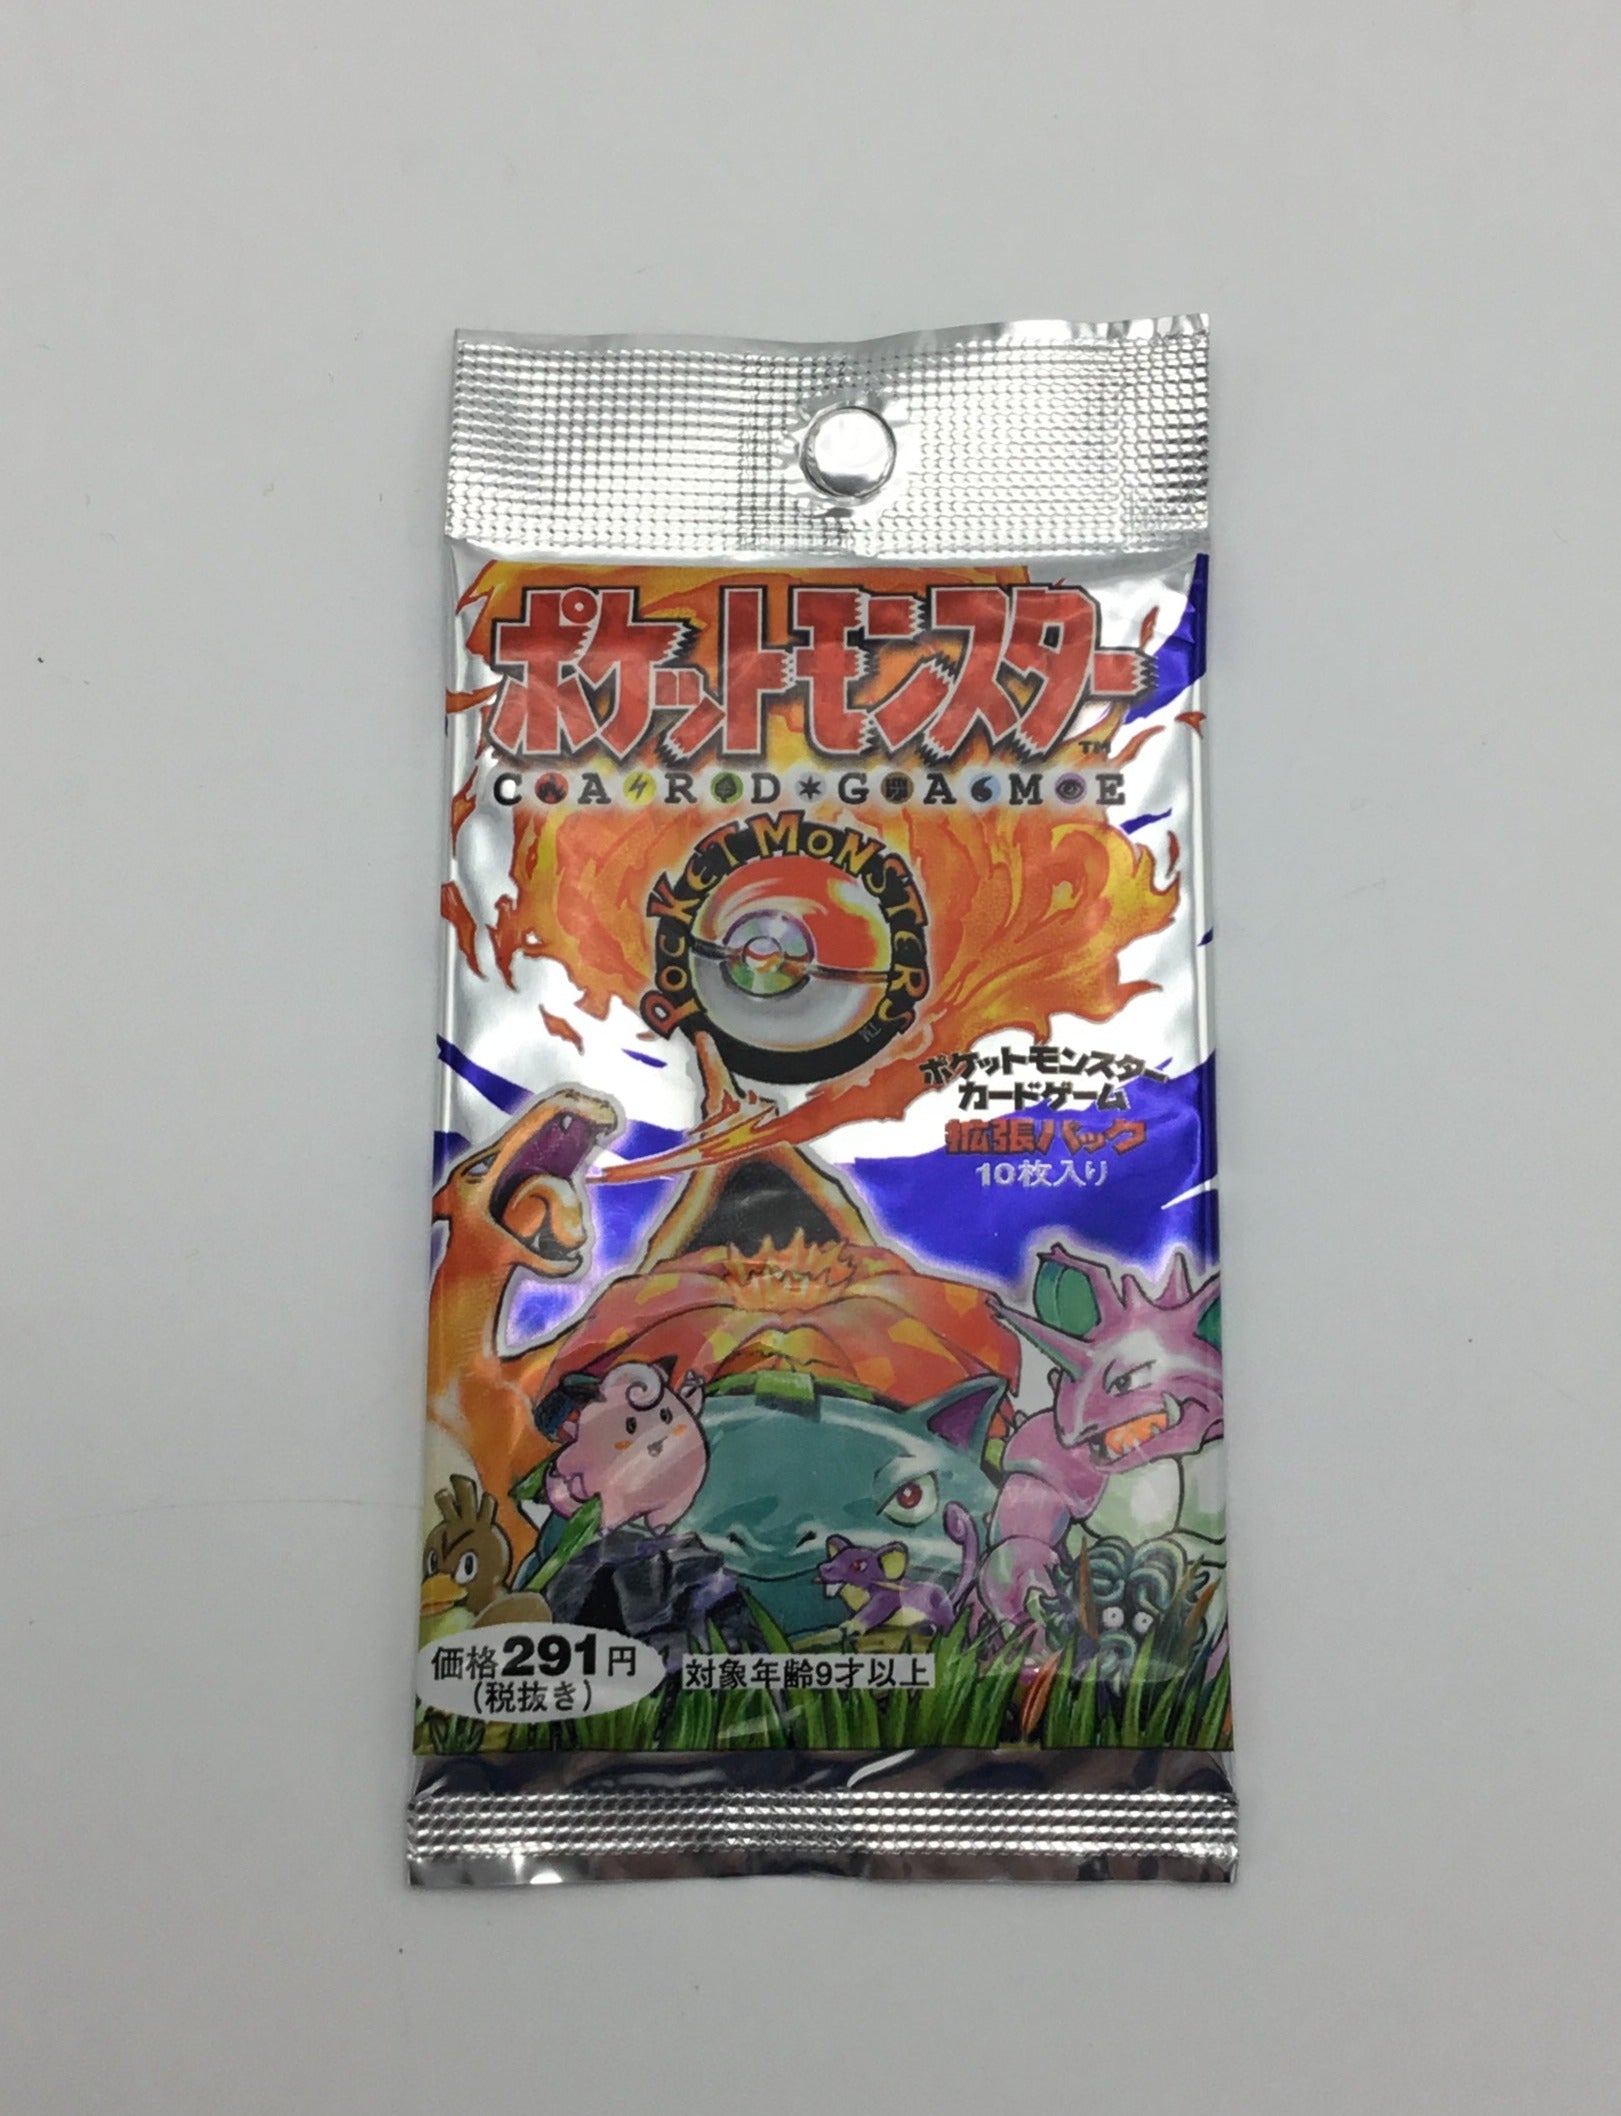 1996 Pokémon Japanese Factory Sealed Foil Pack 291 Yen Pocket Monsters 10 Cards per Pack